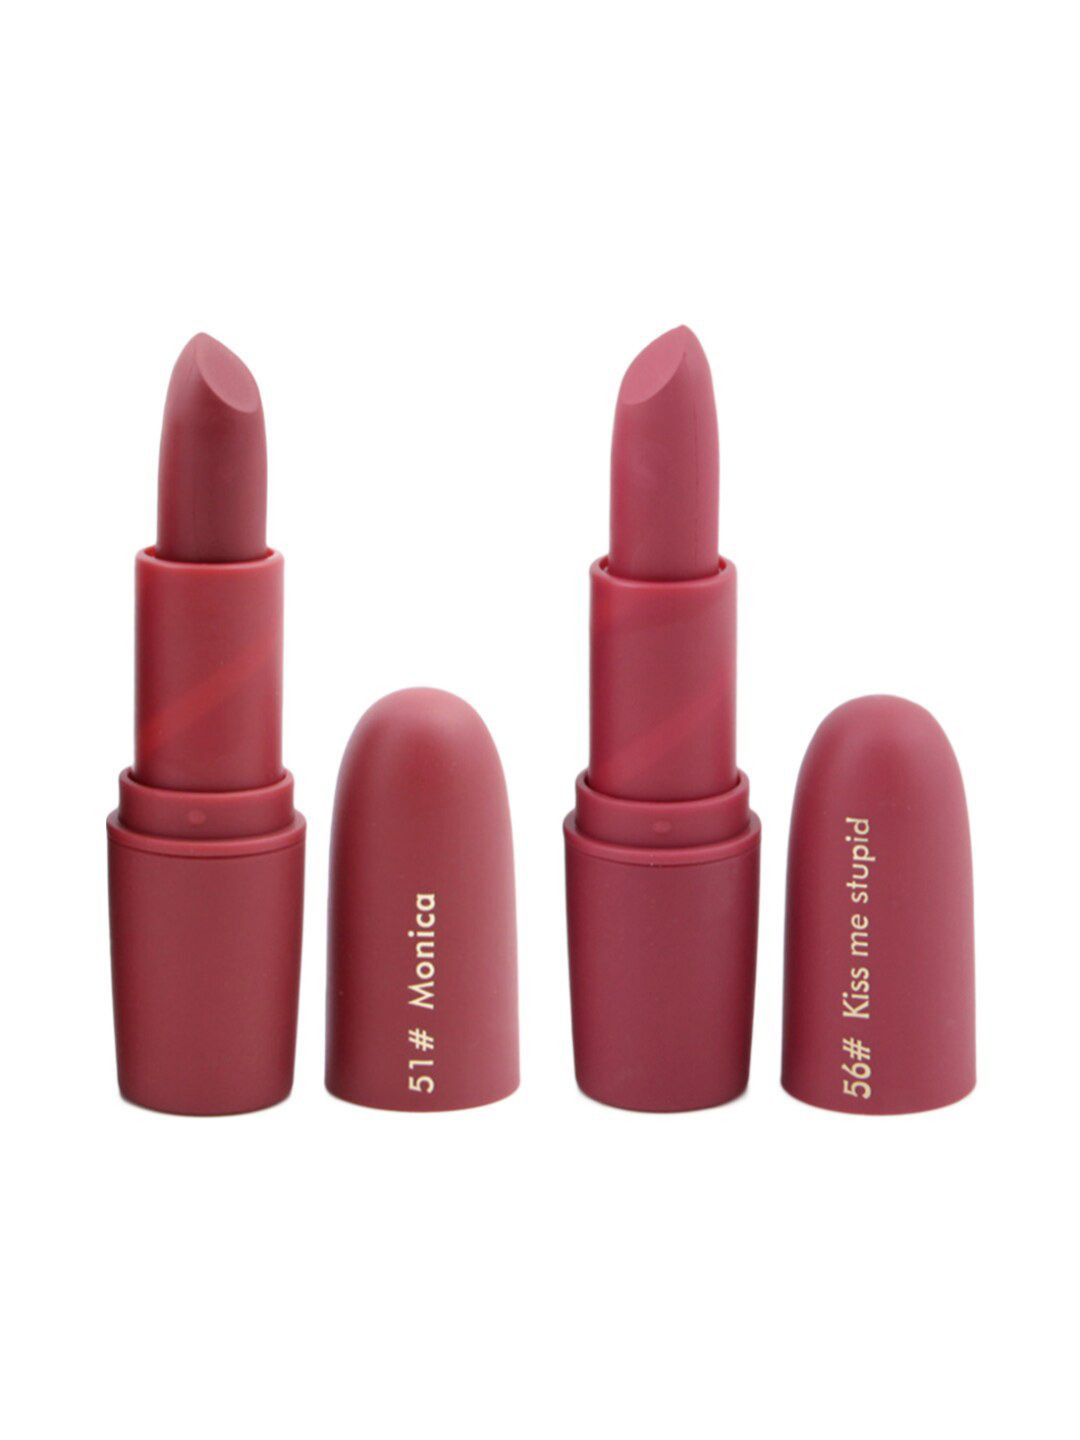 MISS ROSE Set of 2 Matte Creamy Bullet Lipsticks - 51 Monica & 56 Kiss Me Stupid Price in India